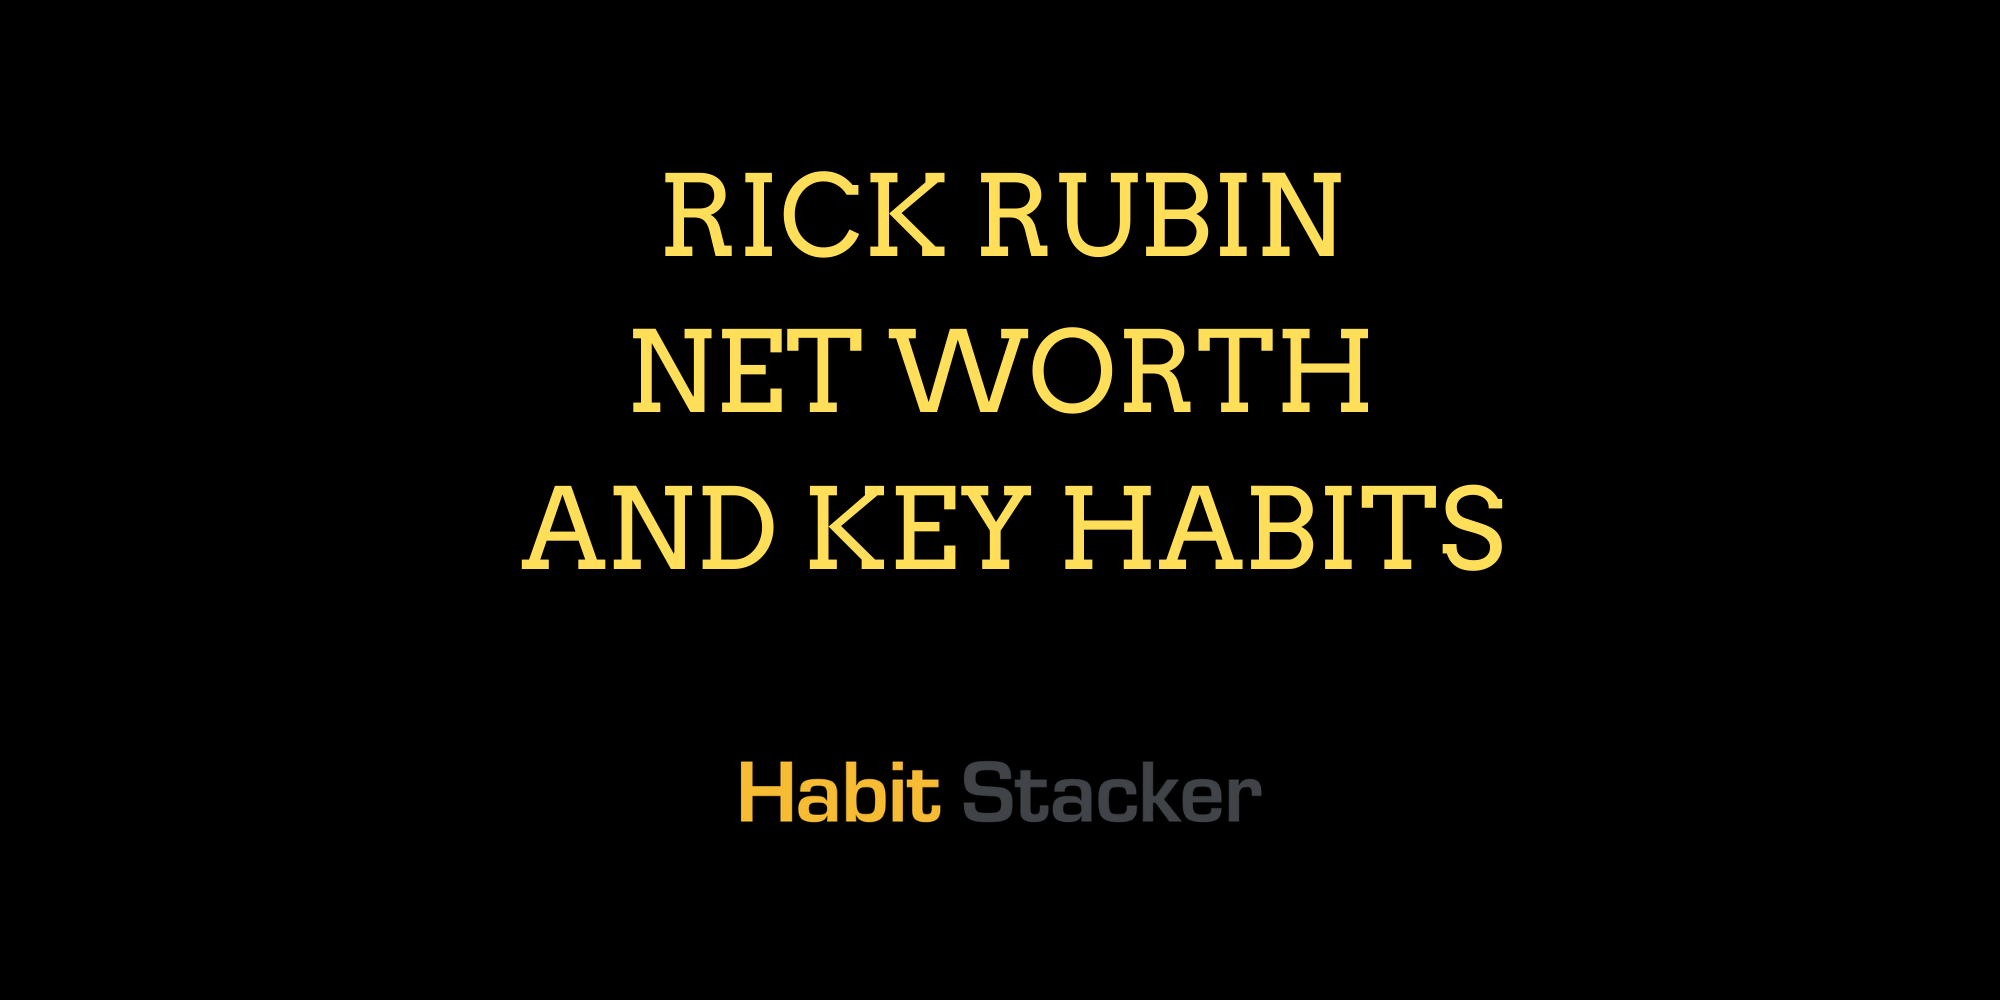 Rick Rubin Net Worth And Key Habits